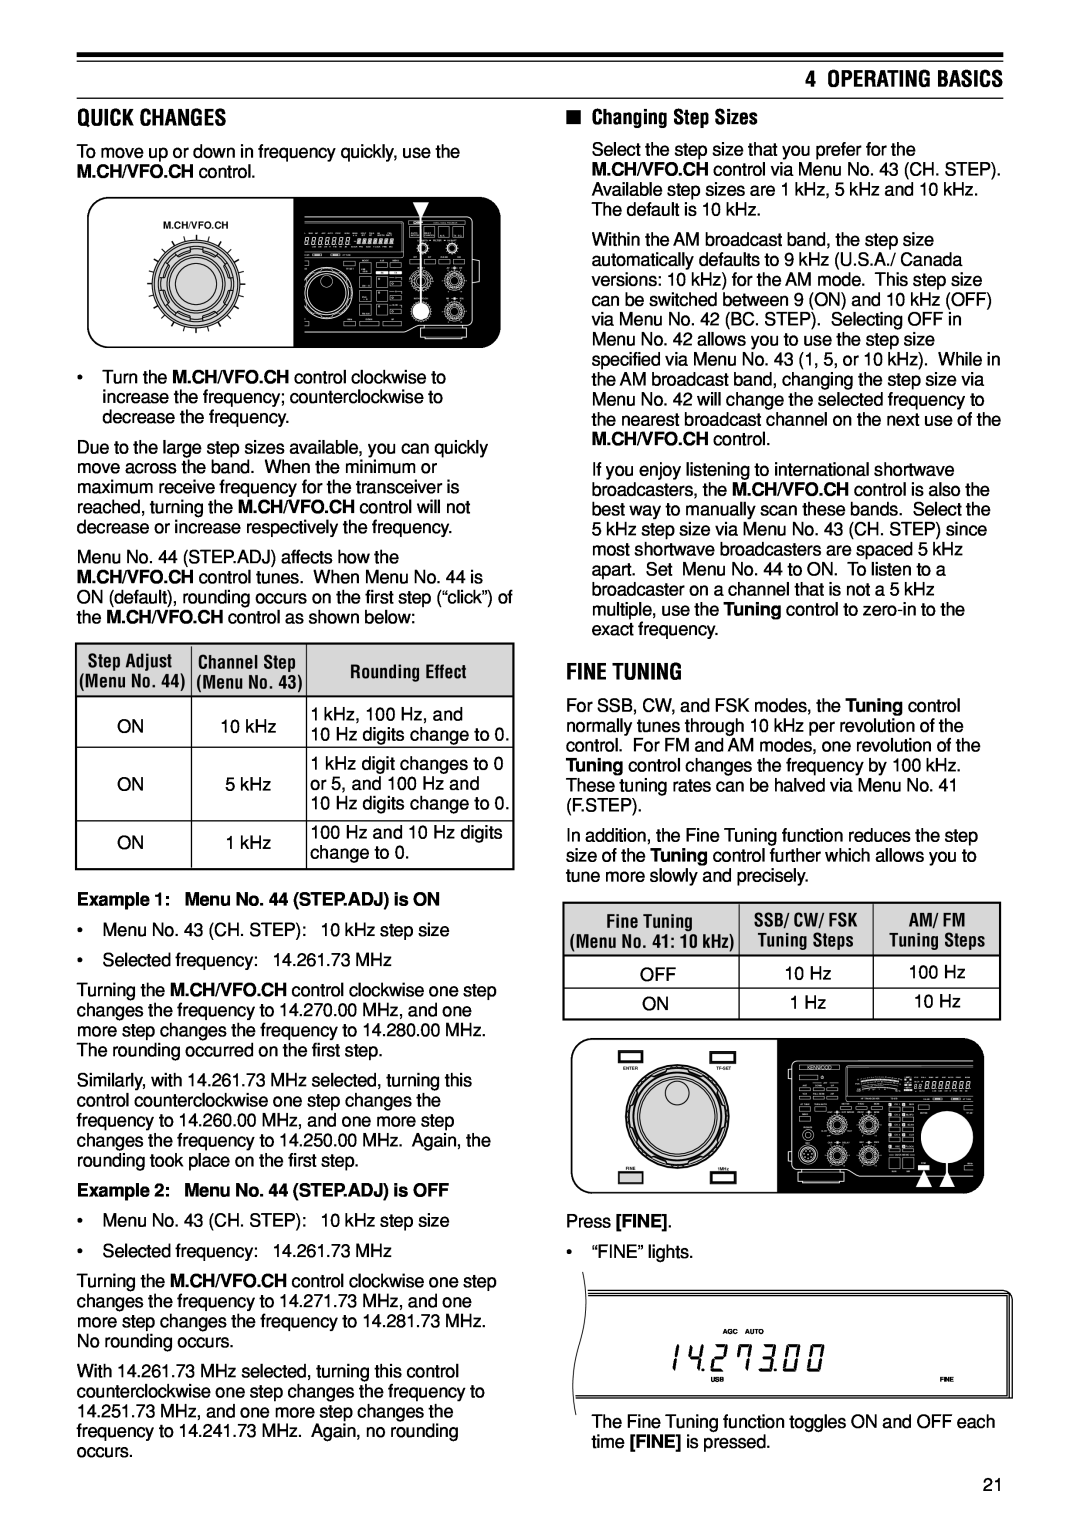 Kenwood TS-870S Quick Changes, Fine Tuning, Changing Step Sizes, Operating Basics, Am/ Fm, 10 Hz, 100 Hz, 1 Hz 